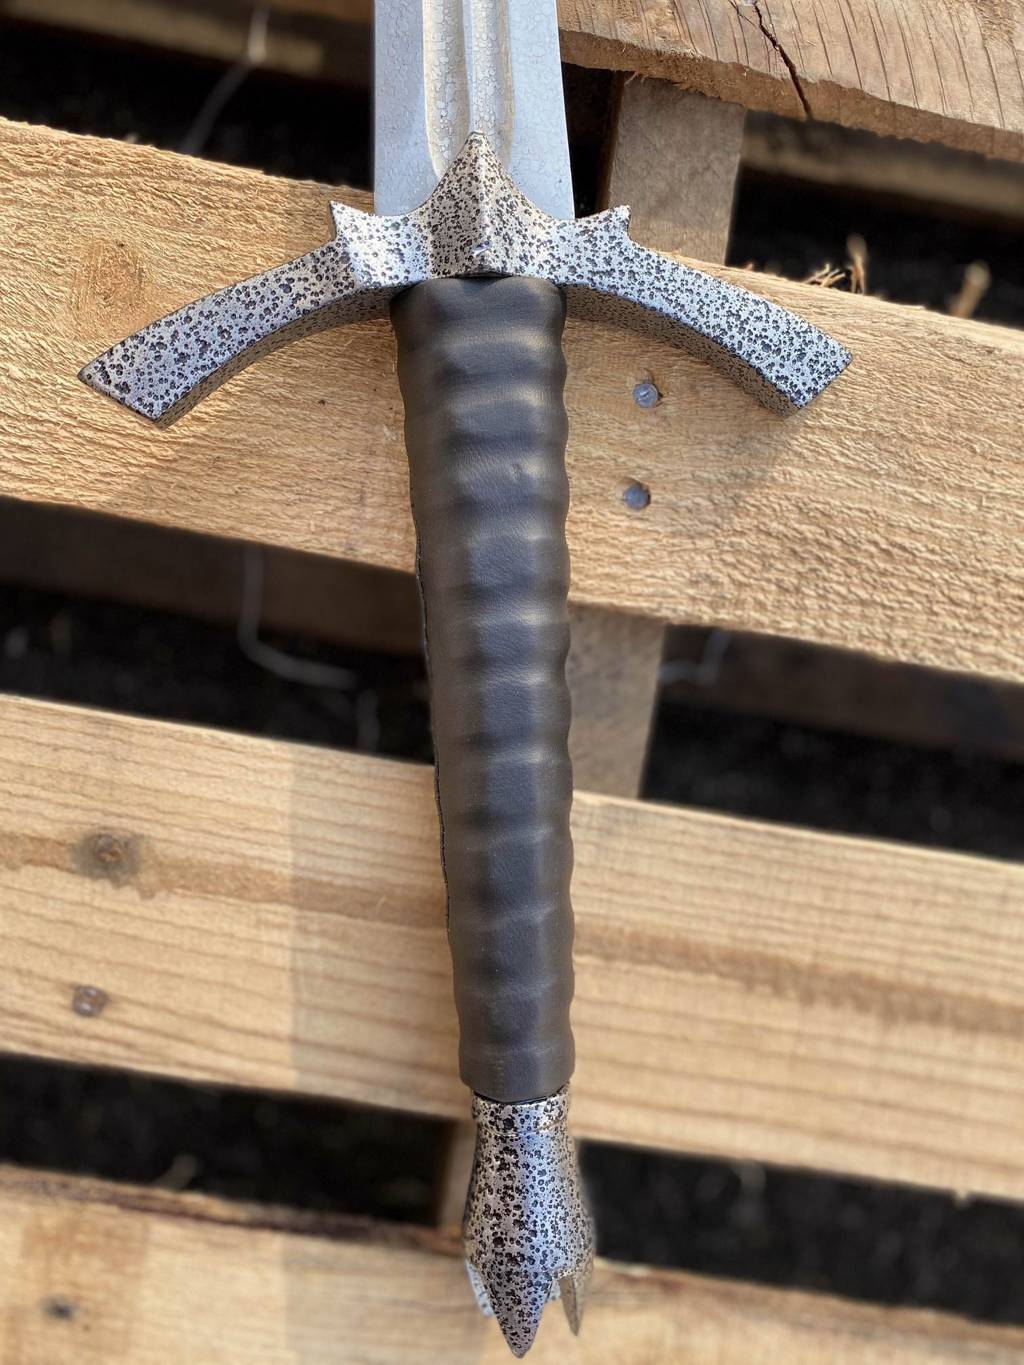 Lotr Morgul Blade of Nazgul Sword for sale hobbit replica dagger